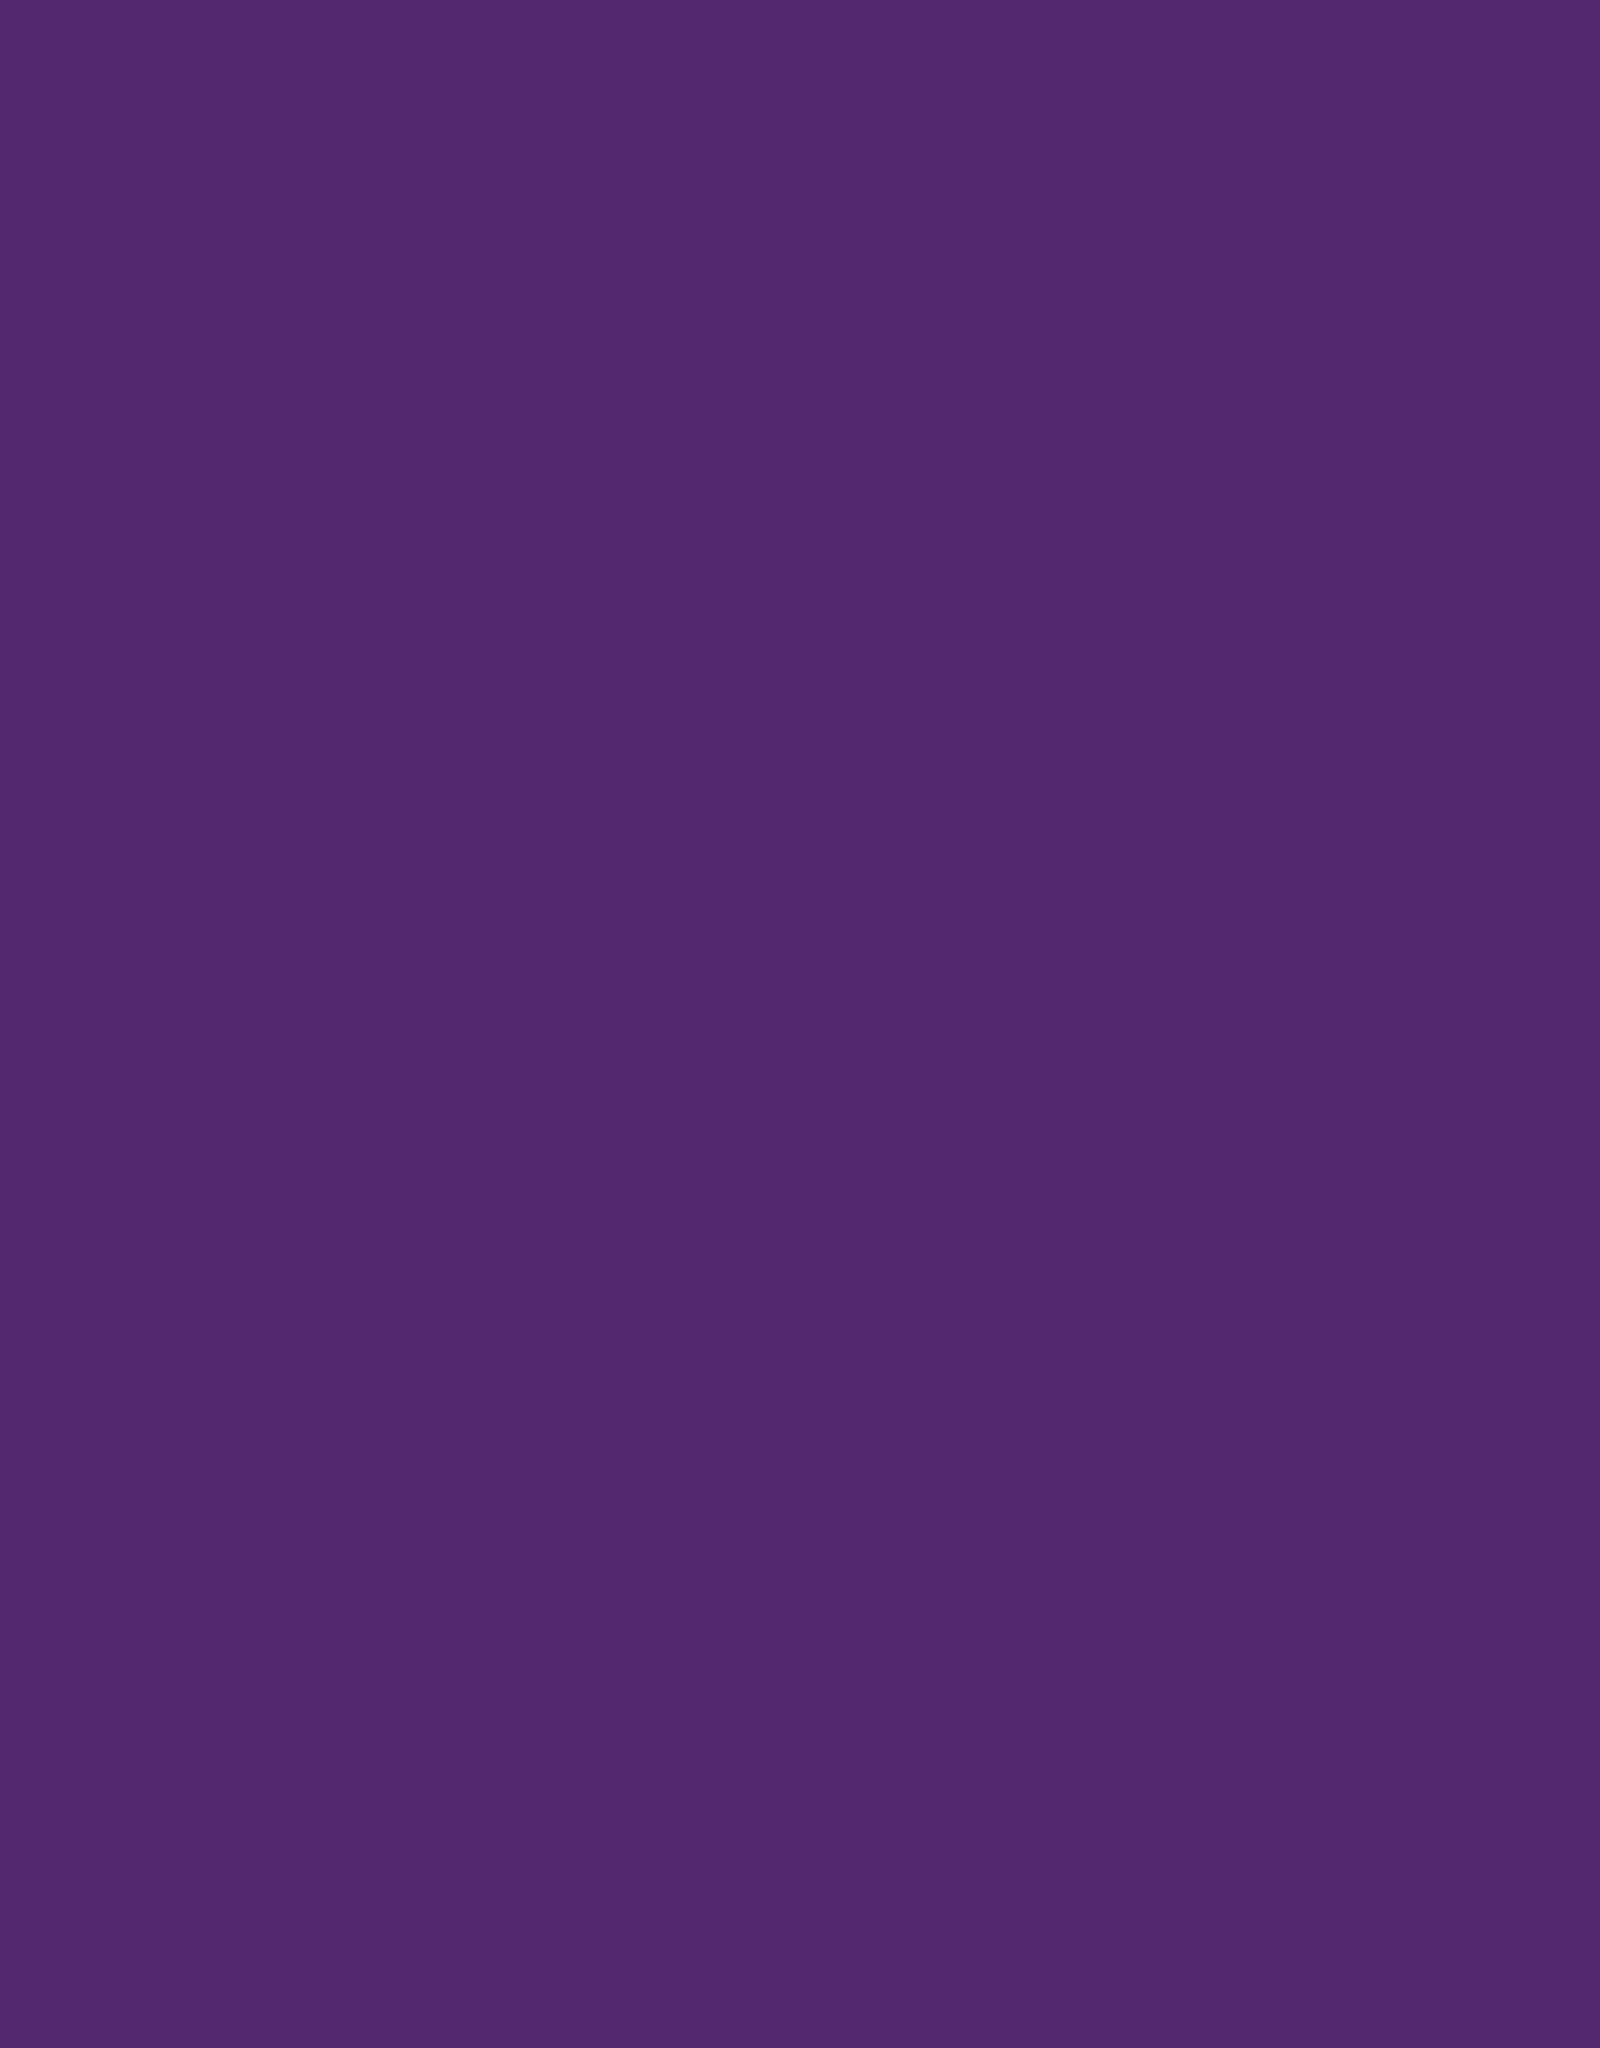 Dyeing Yarn with Jacquard Acid Dyes: Lilac